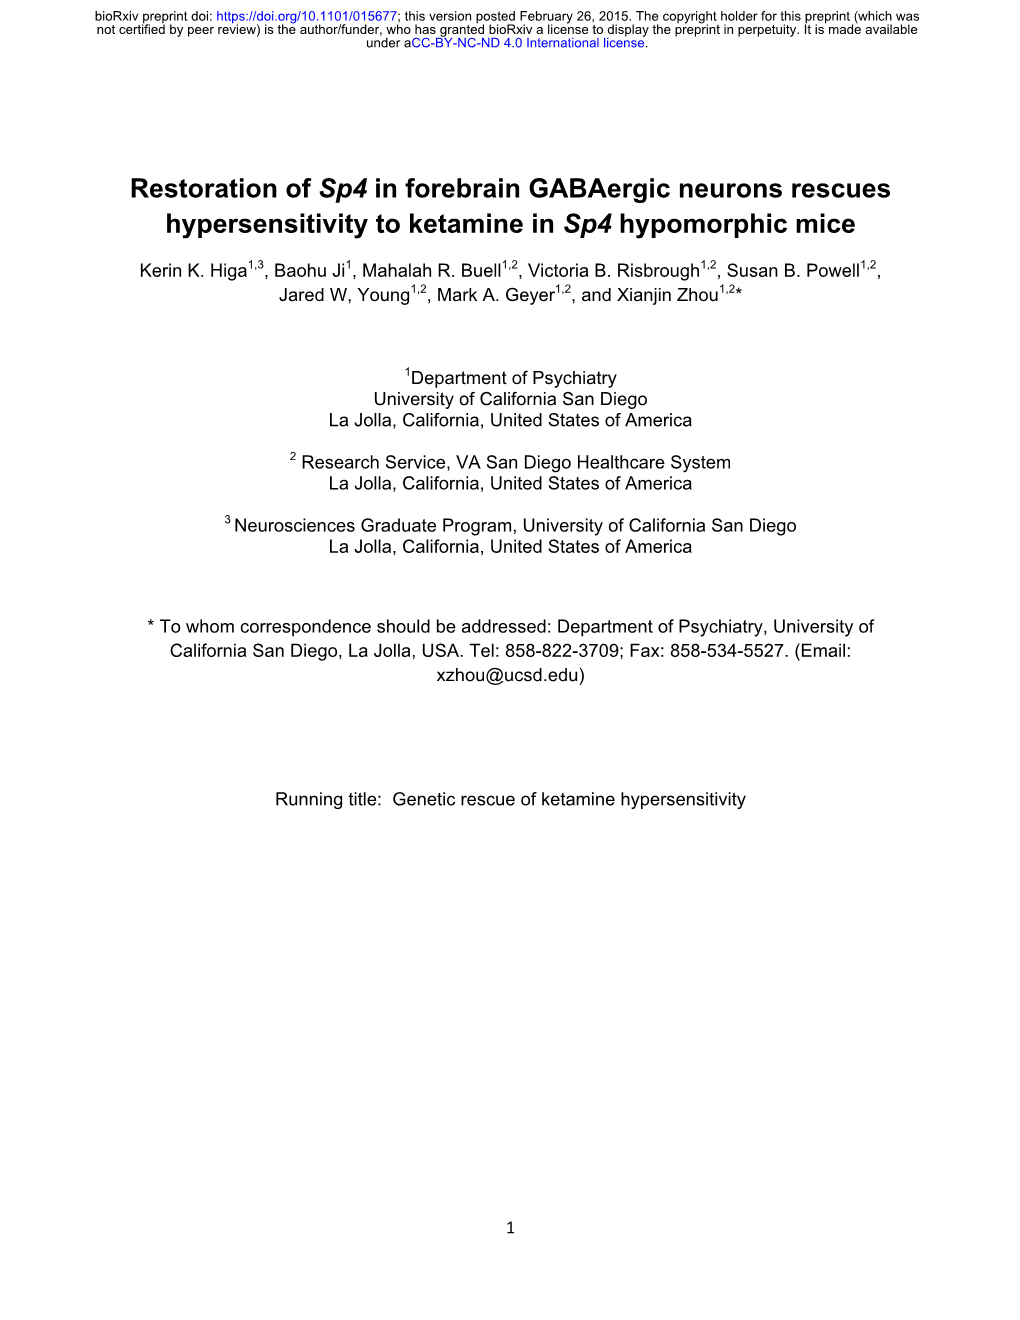 Restoration of Sp4 in Forebrain Gabaergic Neurons Rescues Hypersensitivity to Ketamine in Sp4 Hypomorphic Mice